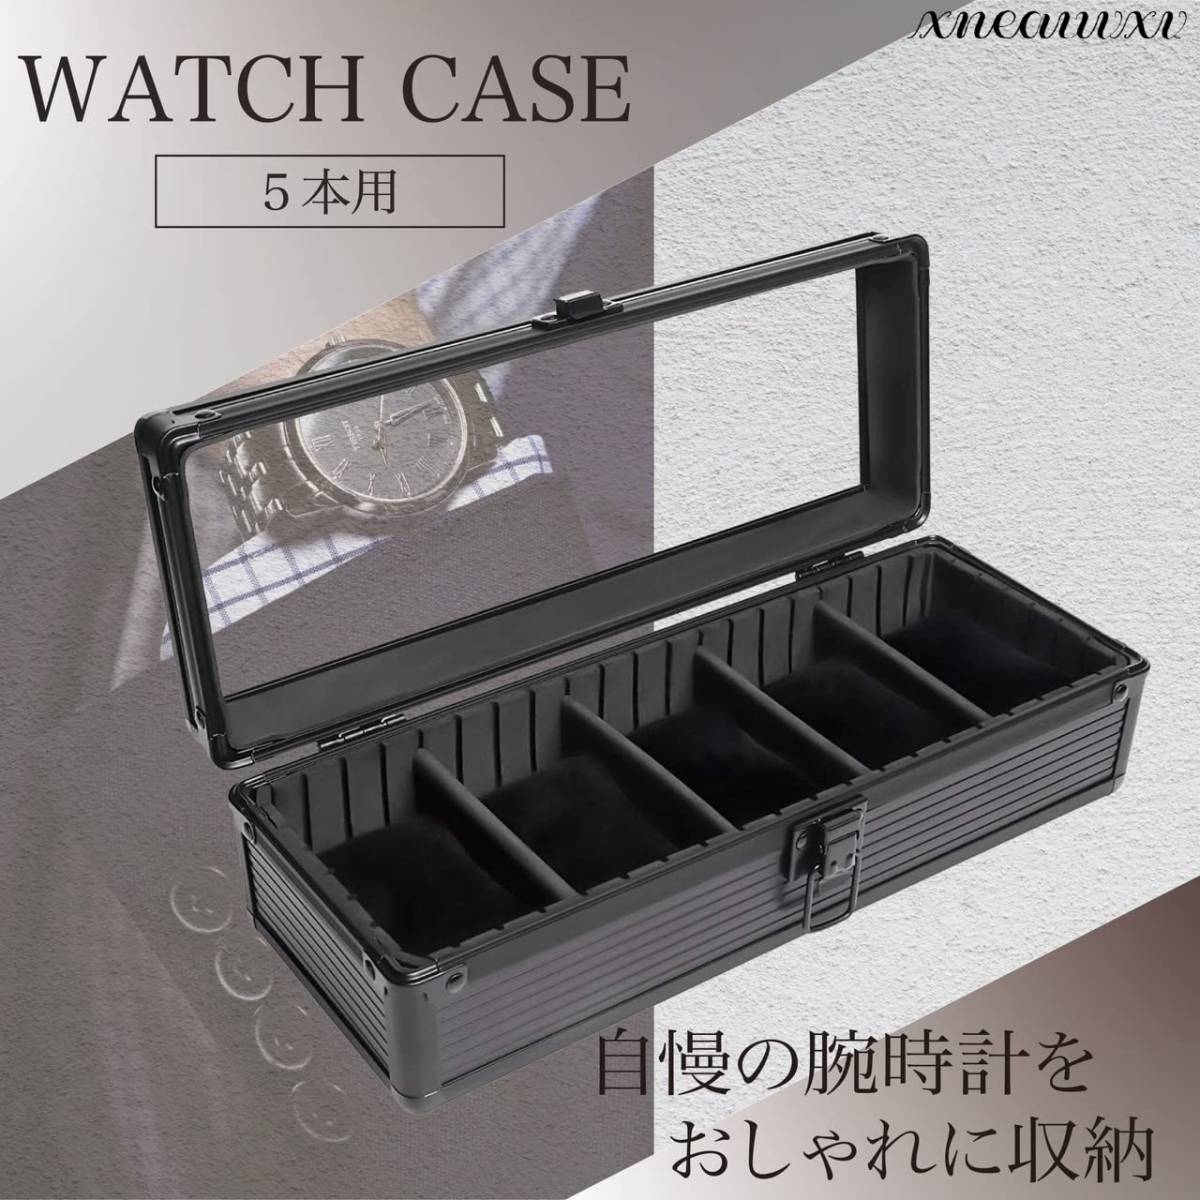  aluminium watch case wristwatch 5ps.@ storage layout accessory watch collection box storage case 